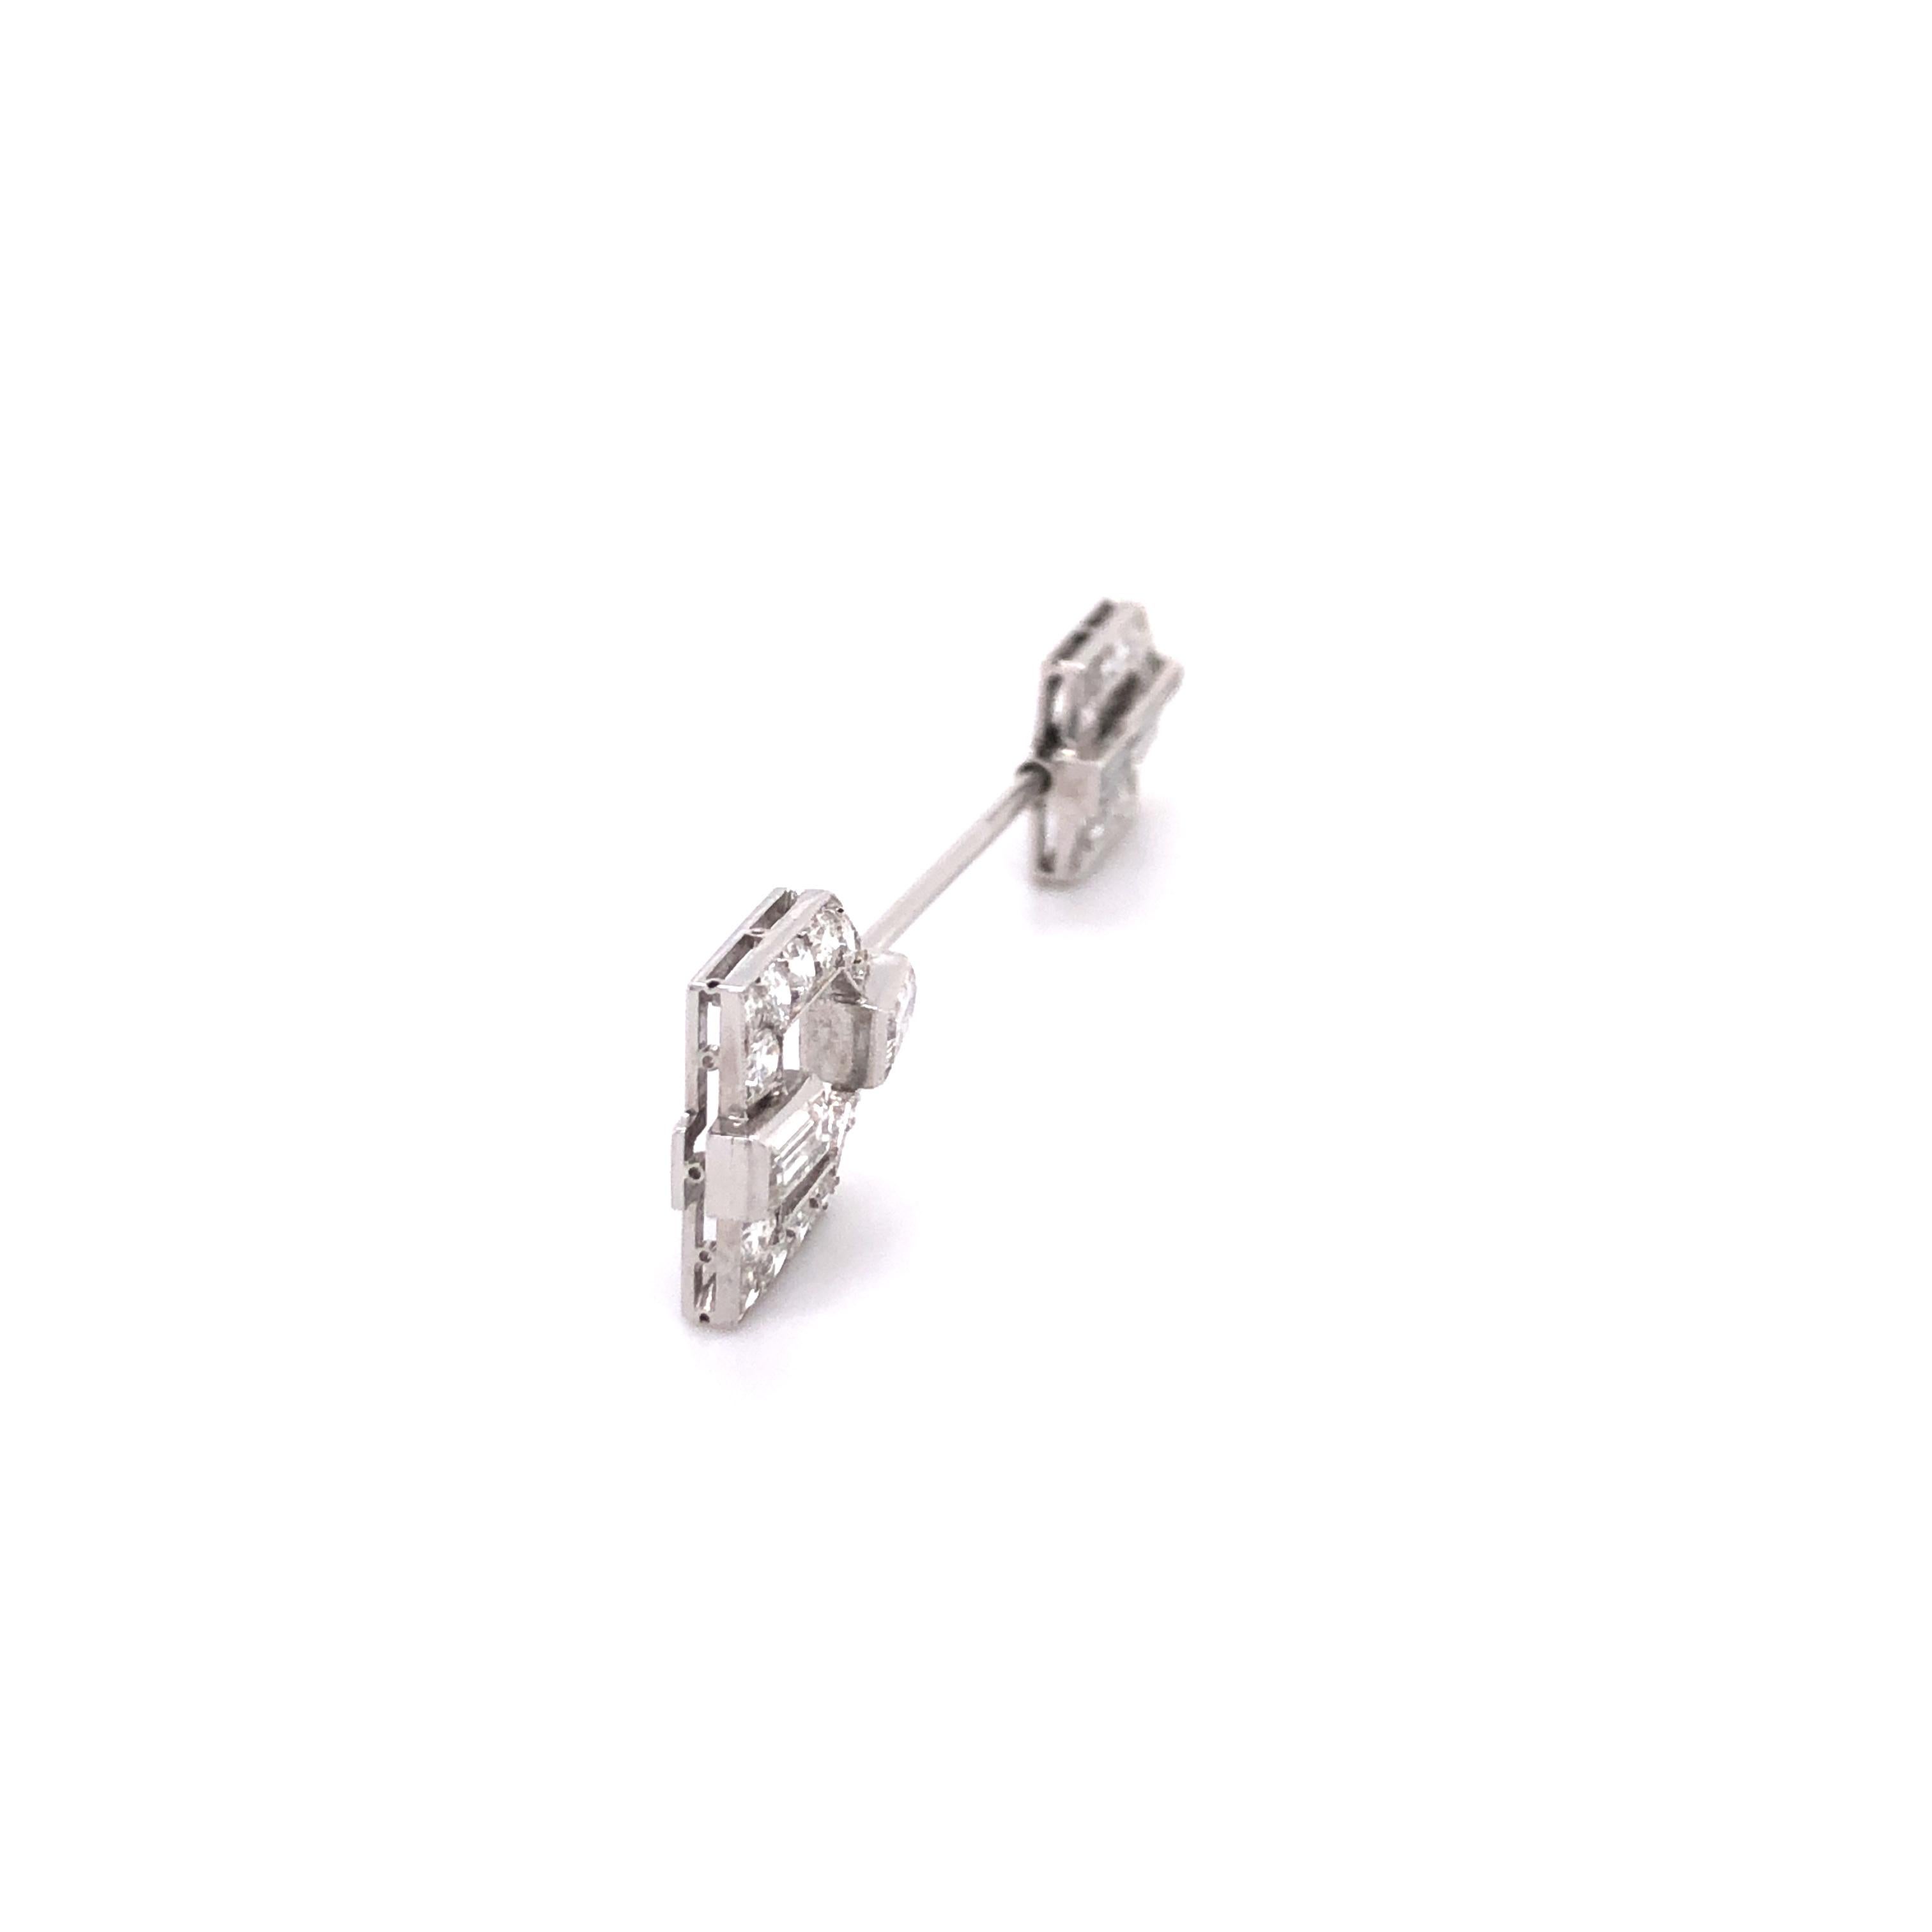 Art Deco Jabot Pin with Diamonds in Platinum and 18 Karat White Gold 2